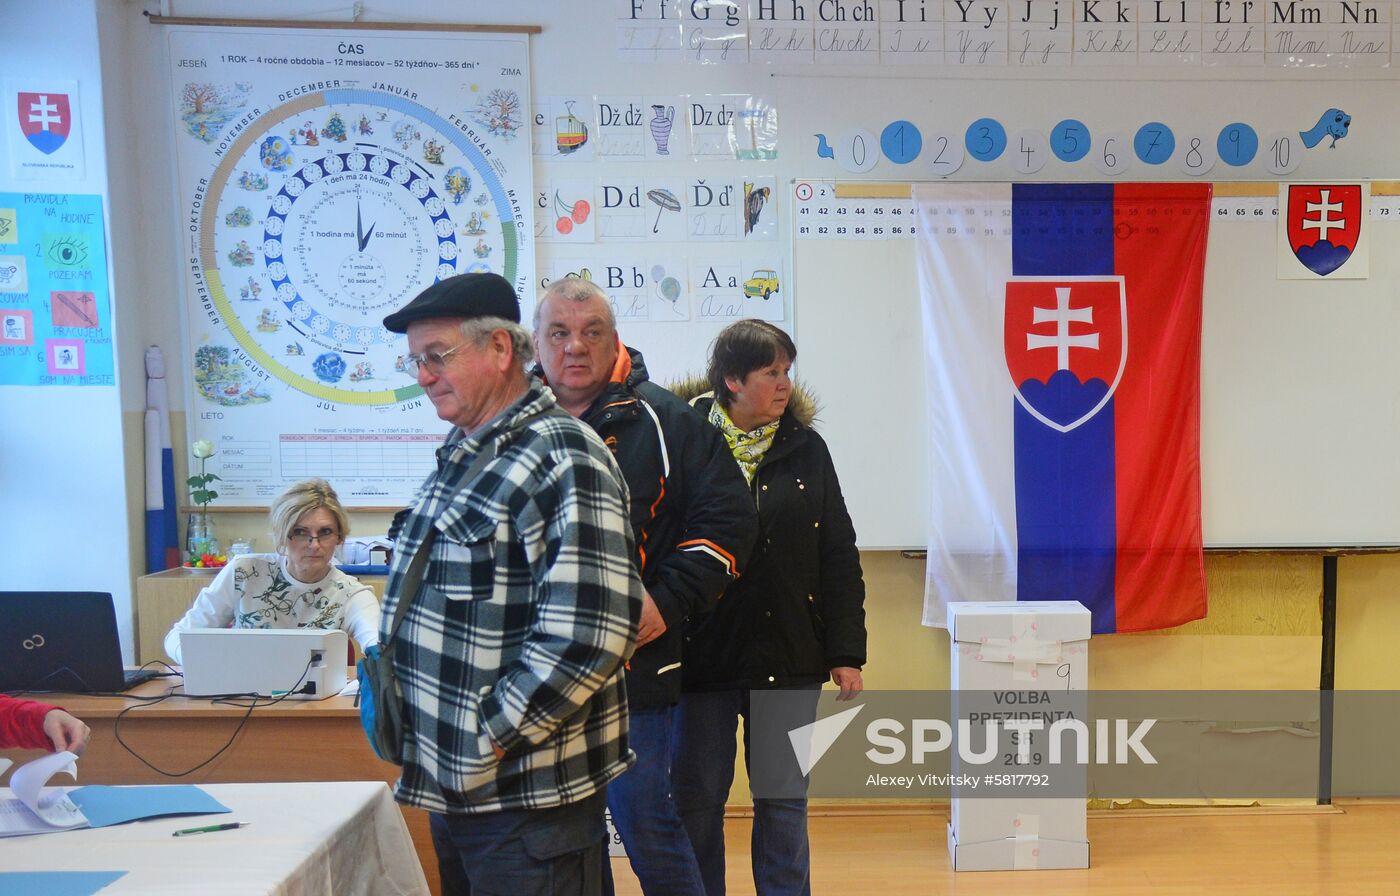 Slovakia Presidential Elections